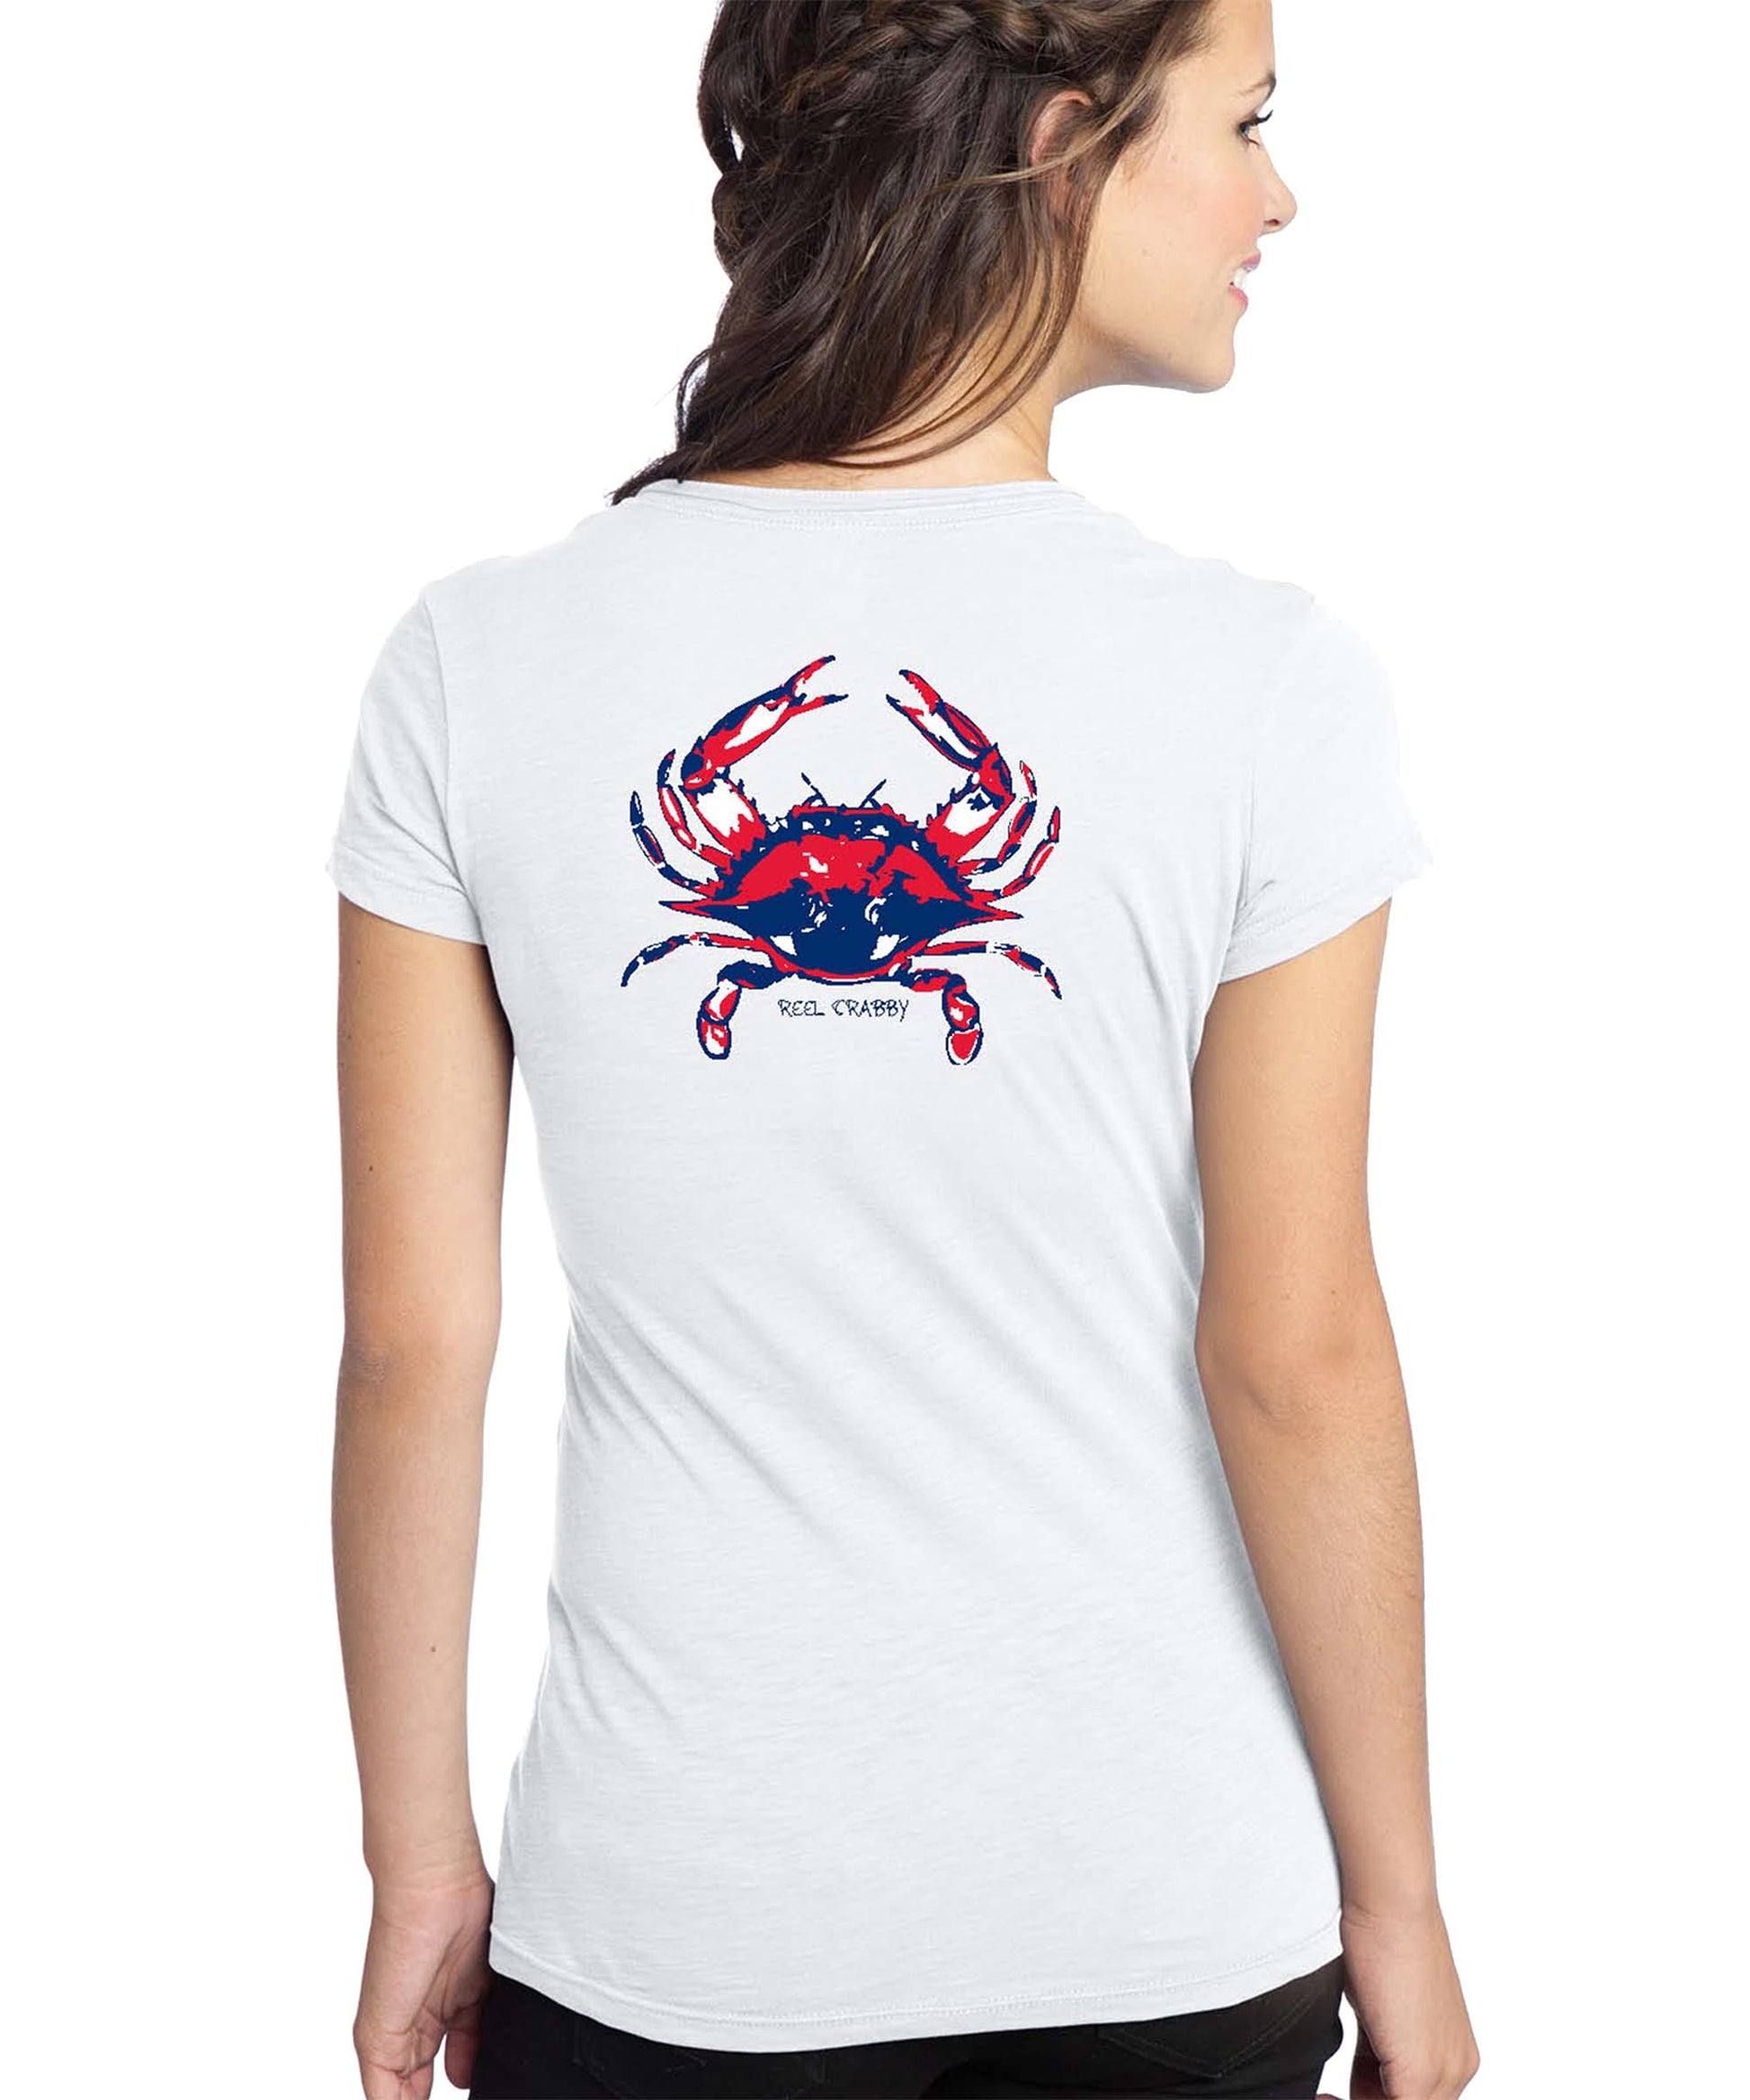 Ladies Crab V-neck Reel Crabby tee - (Model) White shirt